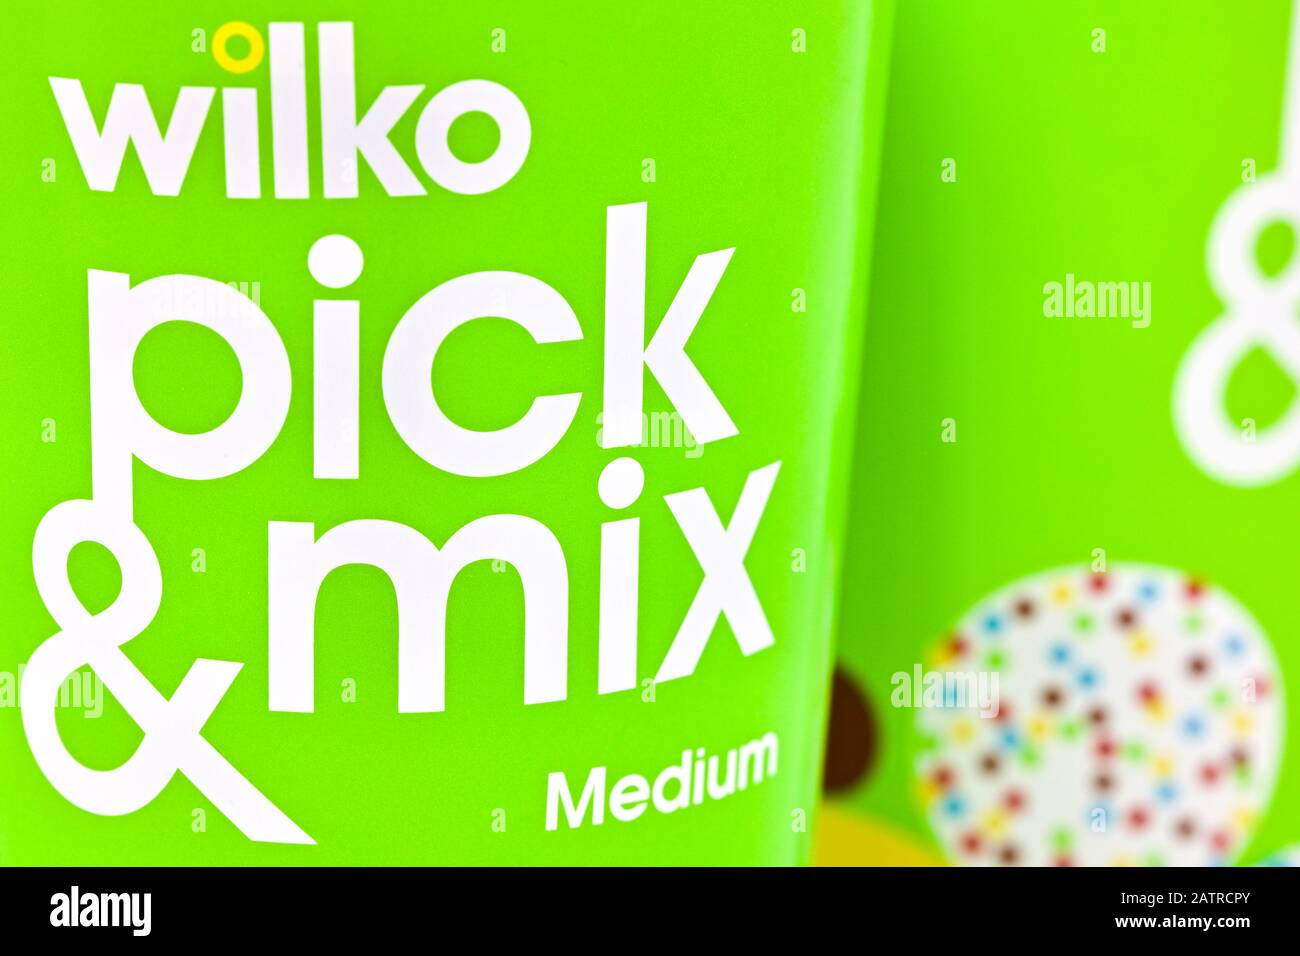 Wilko Pick &Mix Stock Photo